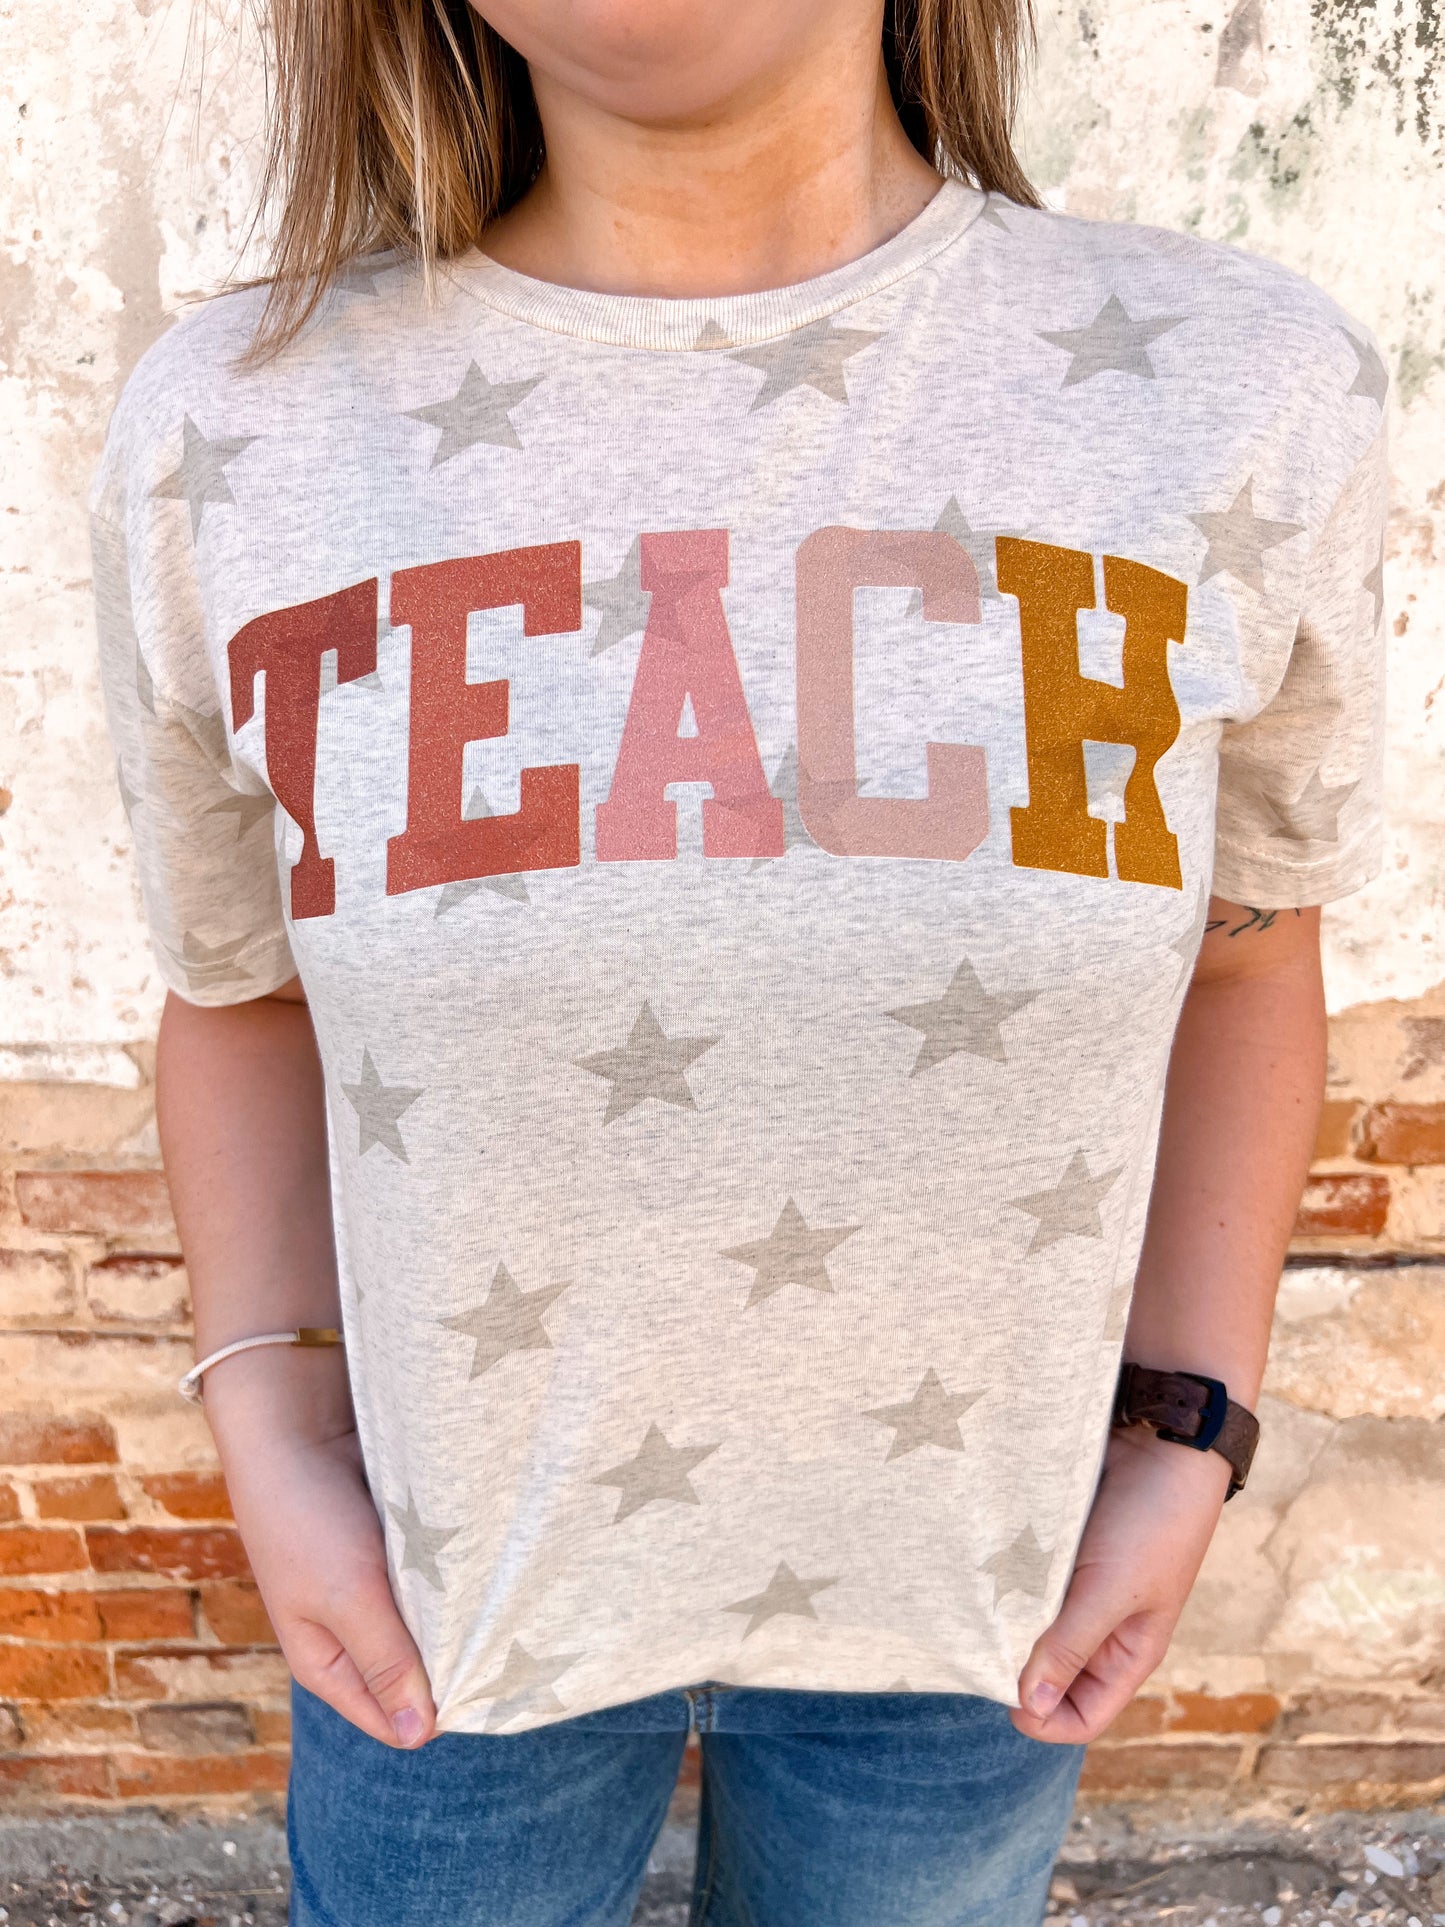 Teach Oatmeal Star Tee Shirt-Shirt-p&pd-bin A4-The Twisted Chandelier